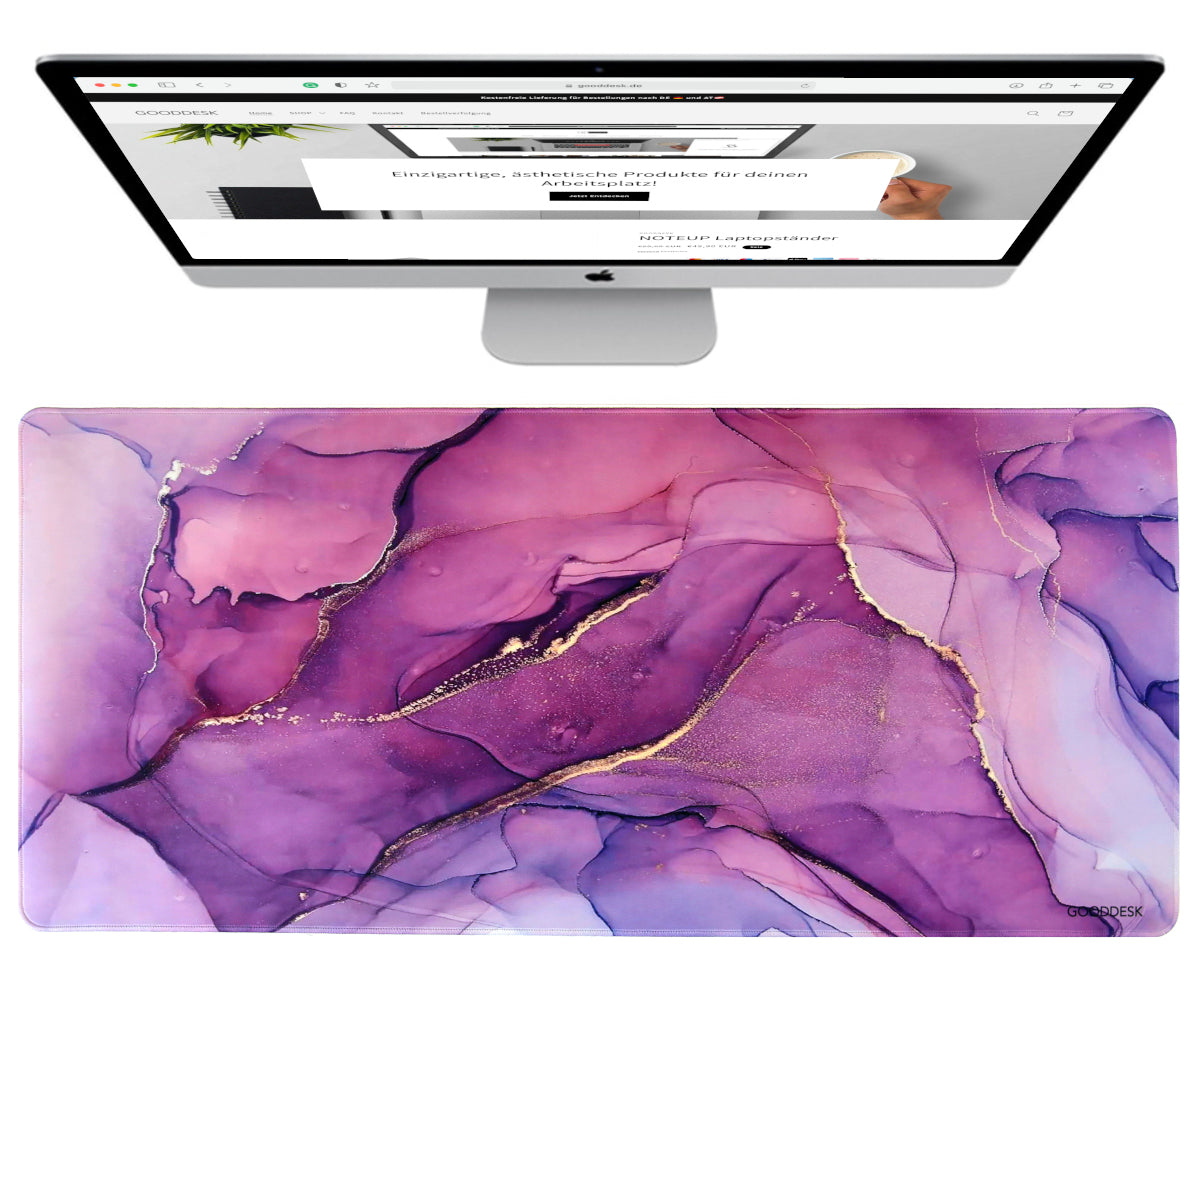 MAMORDESK Schreibtischunterlage Desk mat Mamor design Farben lila gold hell dunkel ergonomisch Farbe Italian Rose